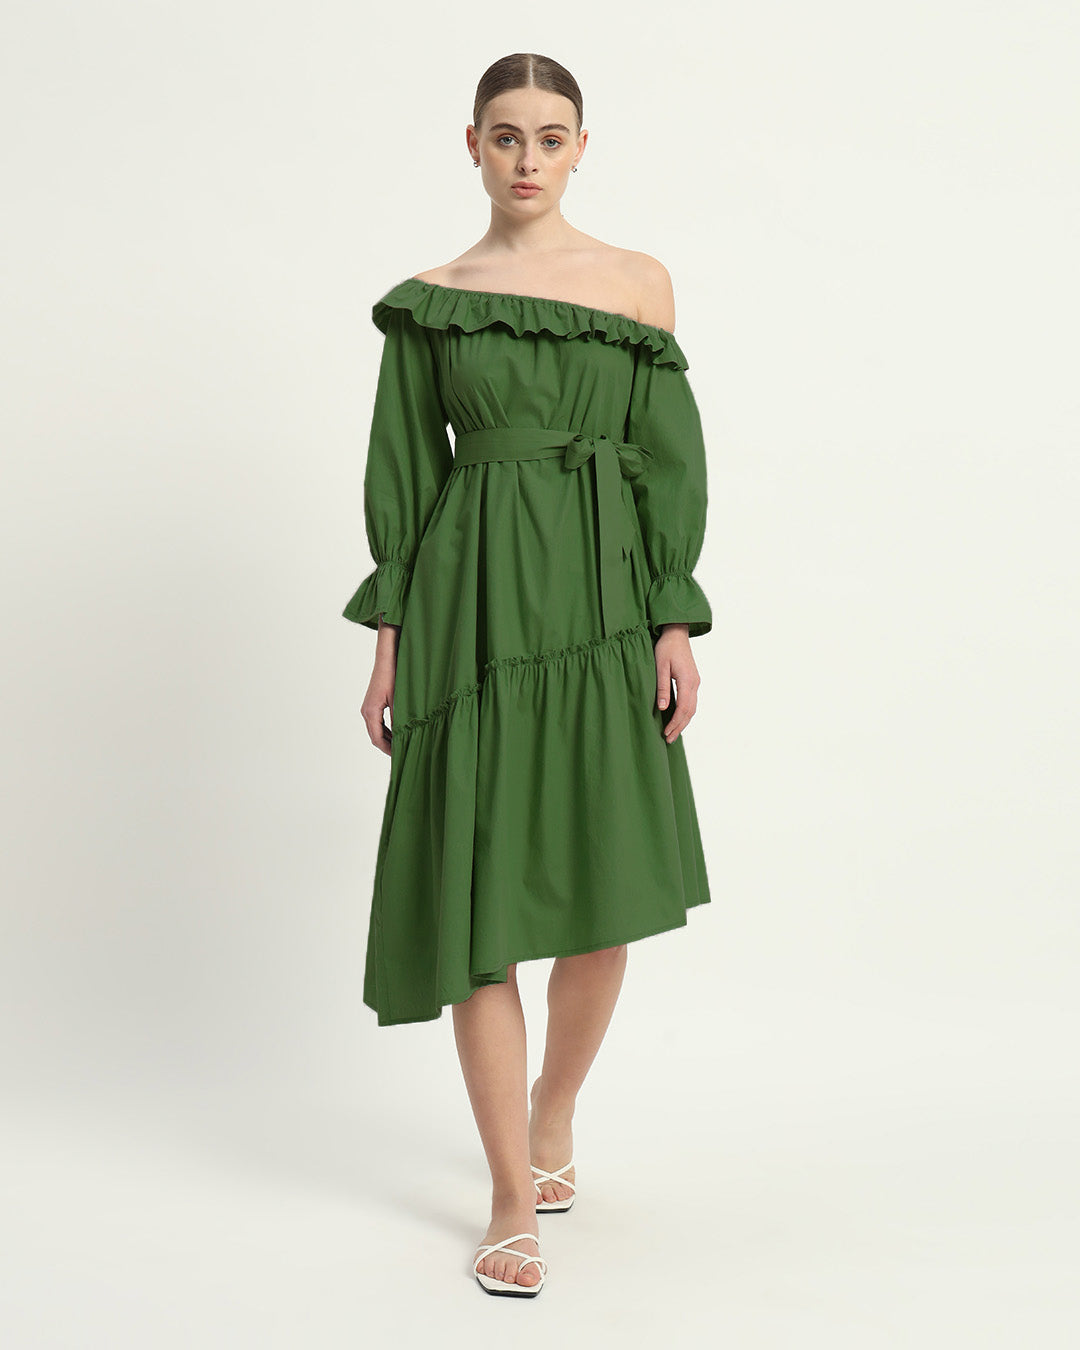 The Emerald Stellata Cotton Dress